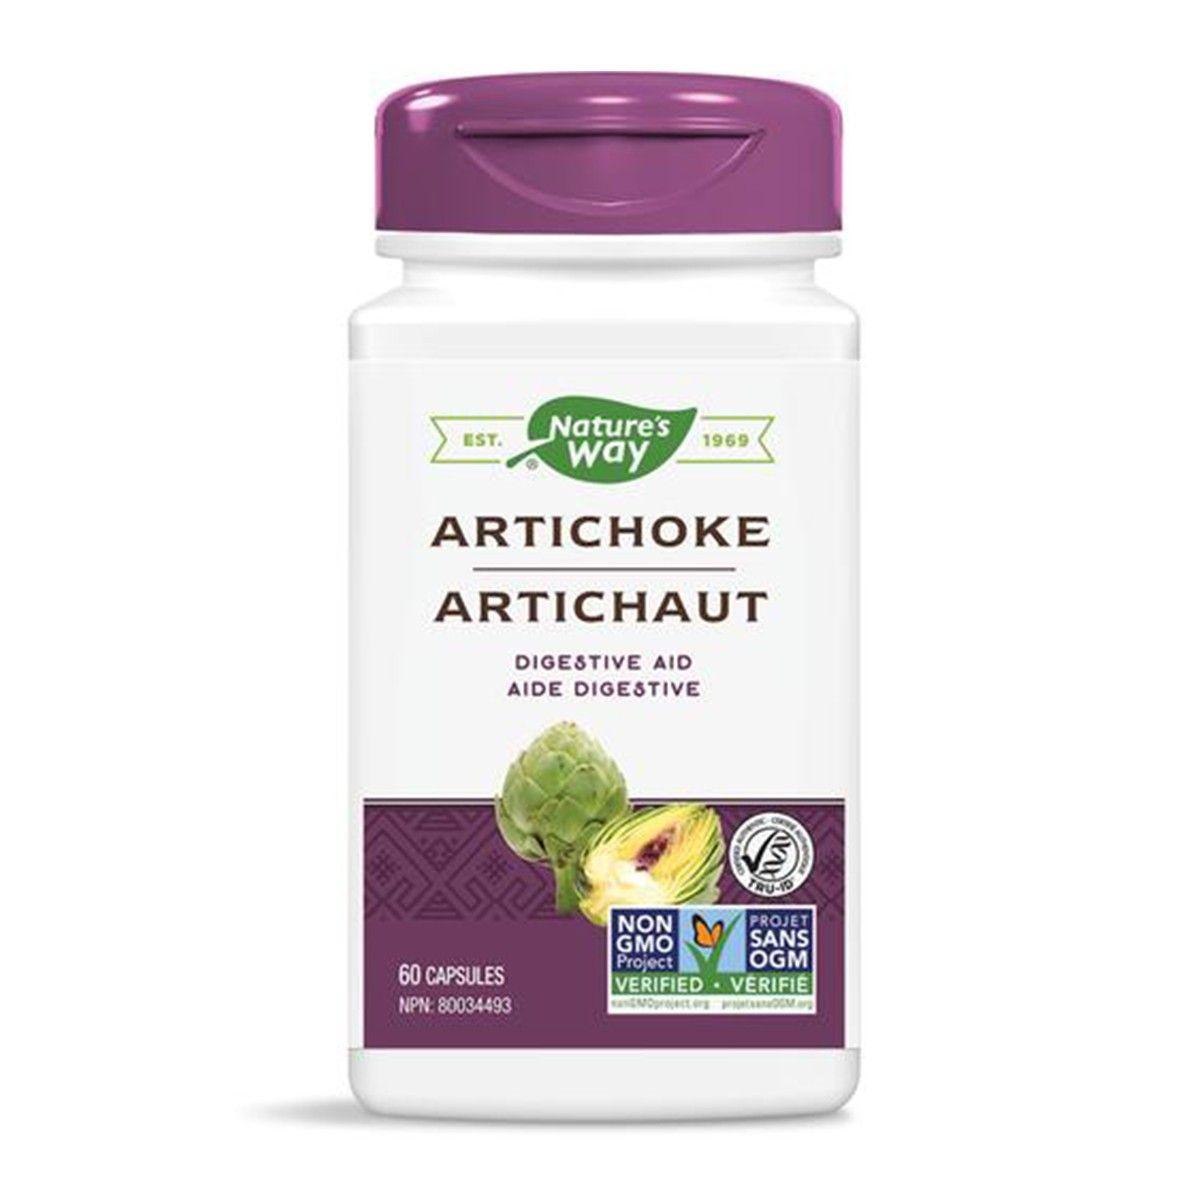 Natures Way Artichoke Standardized 60 Caps Supplements at Village Vitamin Store